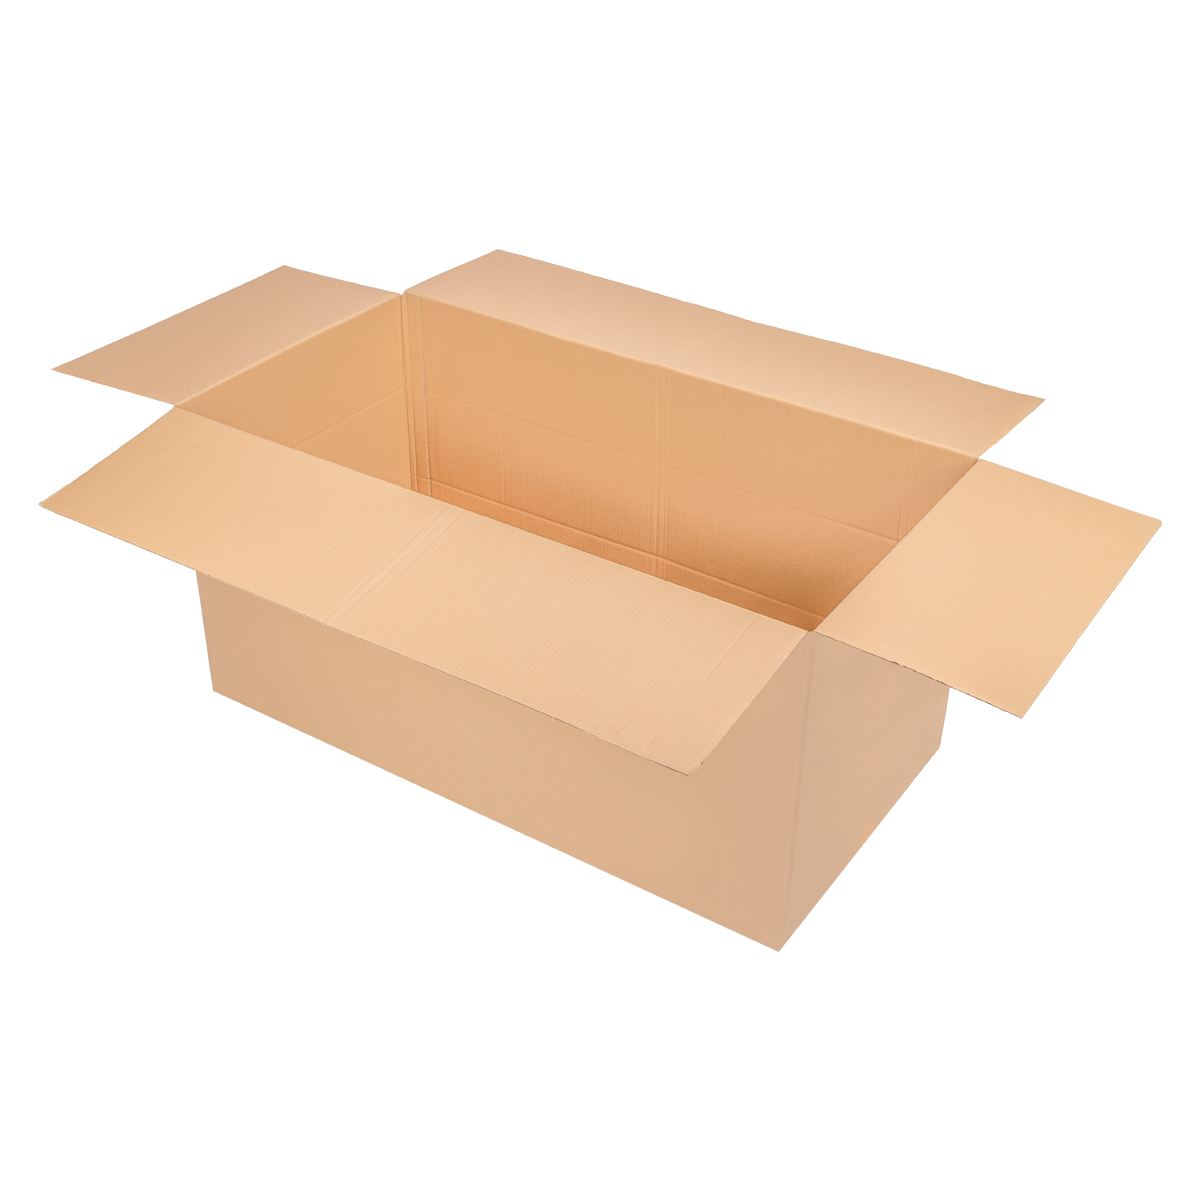 Folding carton 2-wall BC corrugated, 1200x600x600mm, brown, DHL carton